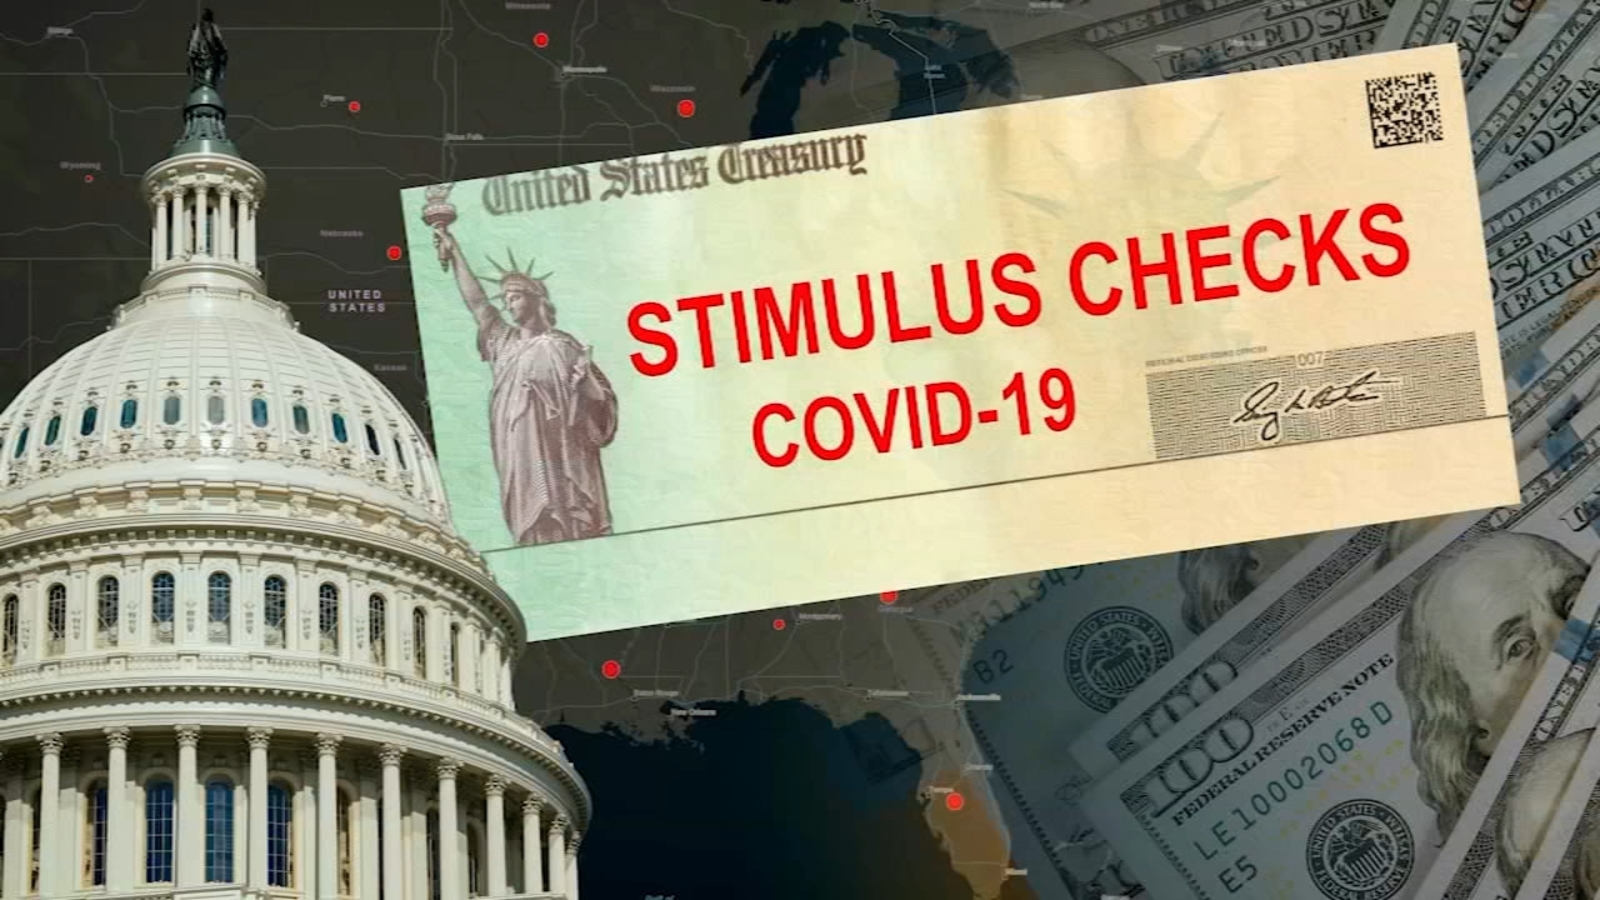 U.S gets ready for third rounf of stimulus checks as Senate pases biden's 1,9 trillion dolar stimulus checks